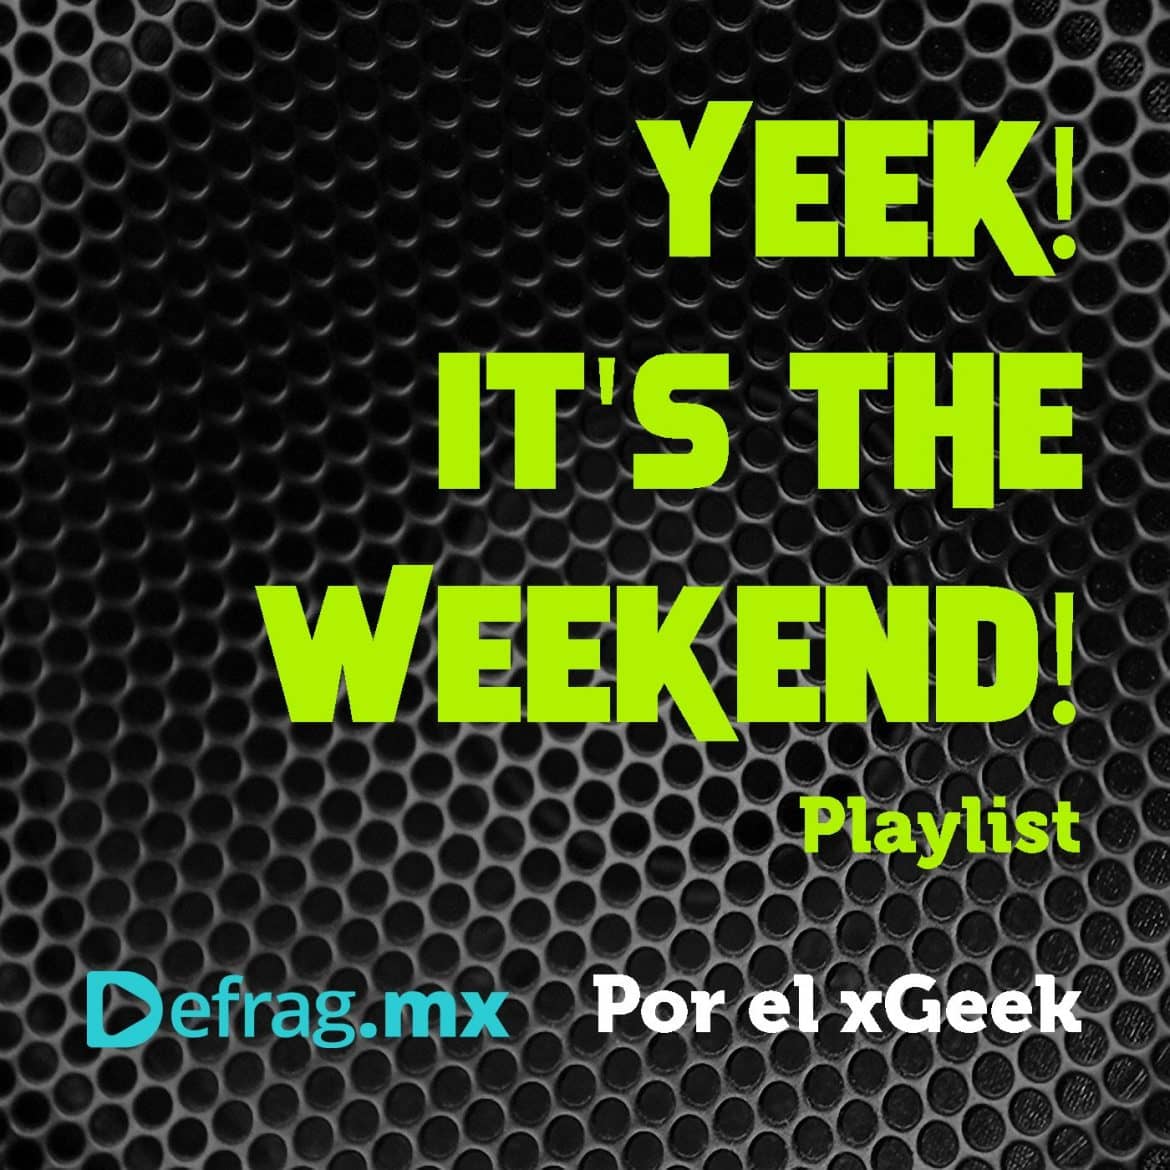 Defrag.mx Yeek! It's The Weekend! Playlist Jun 10 2022